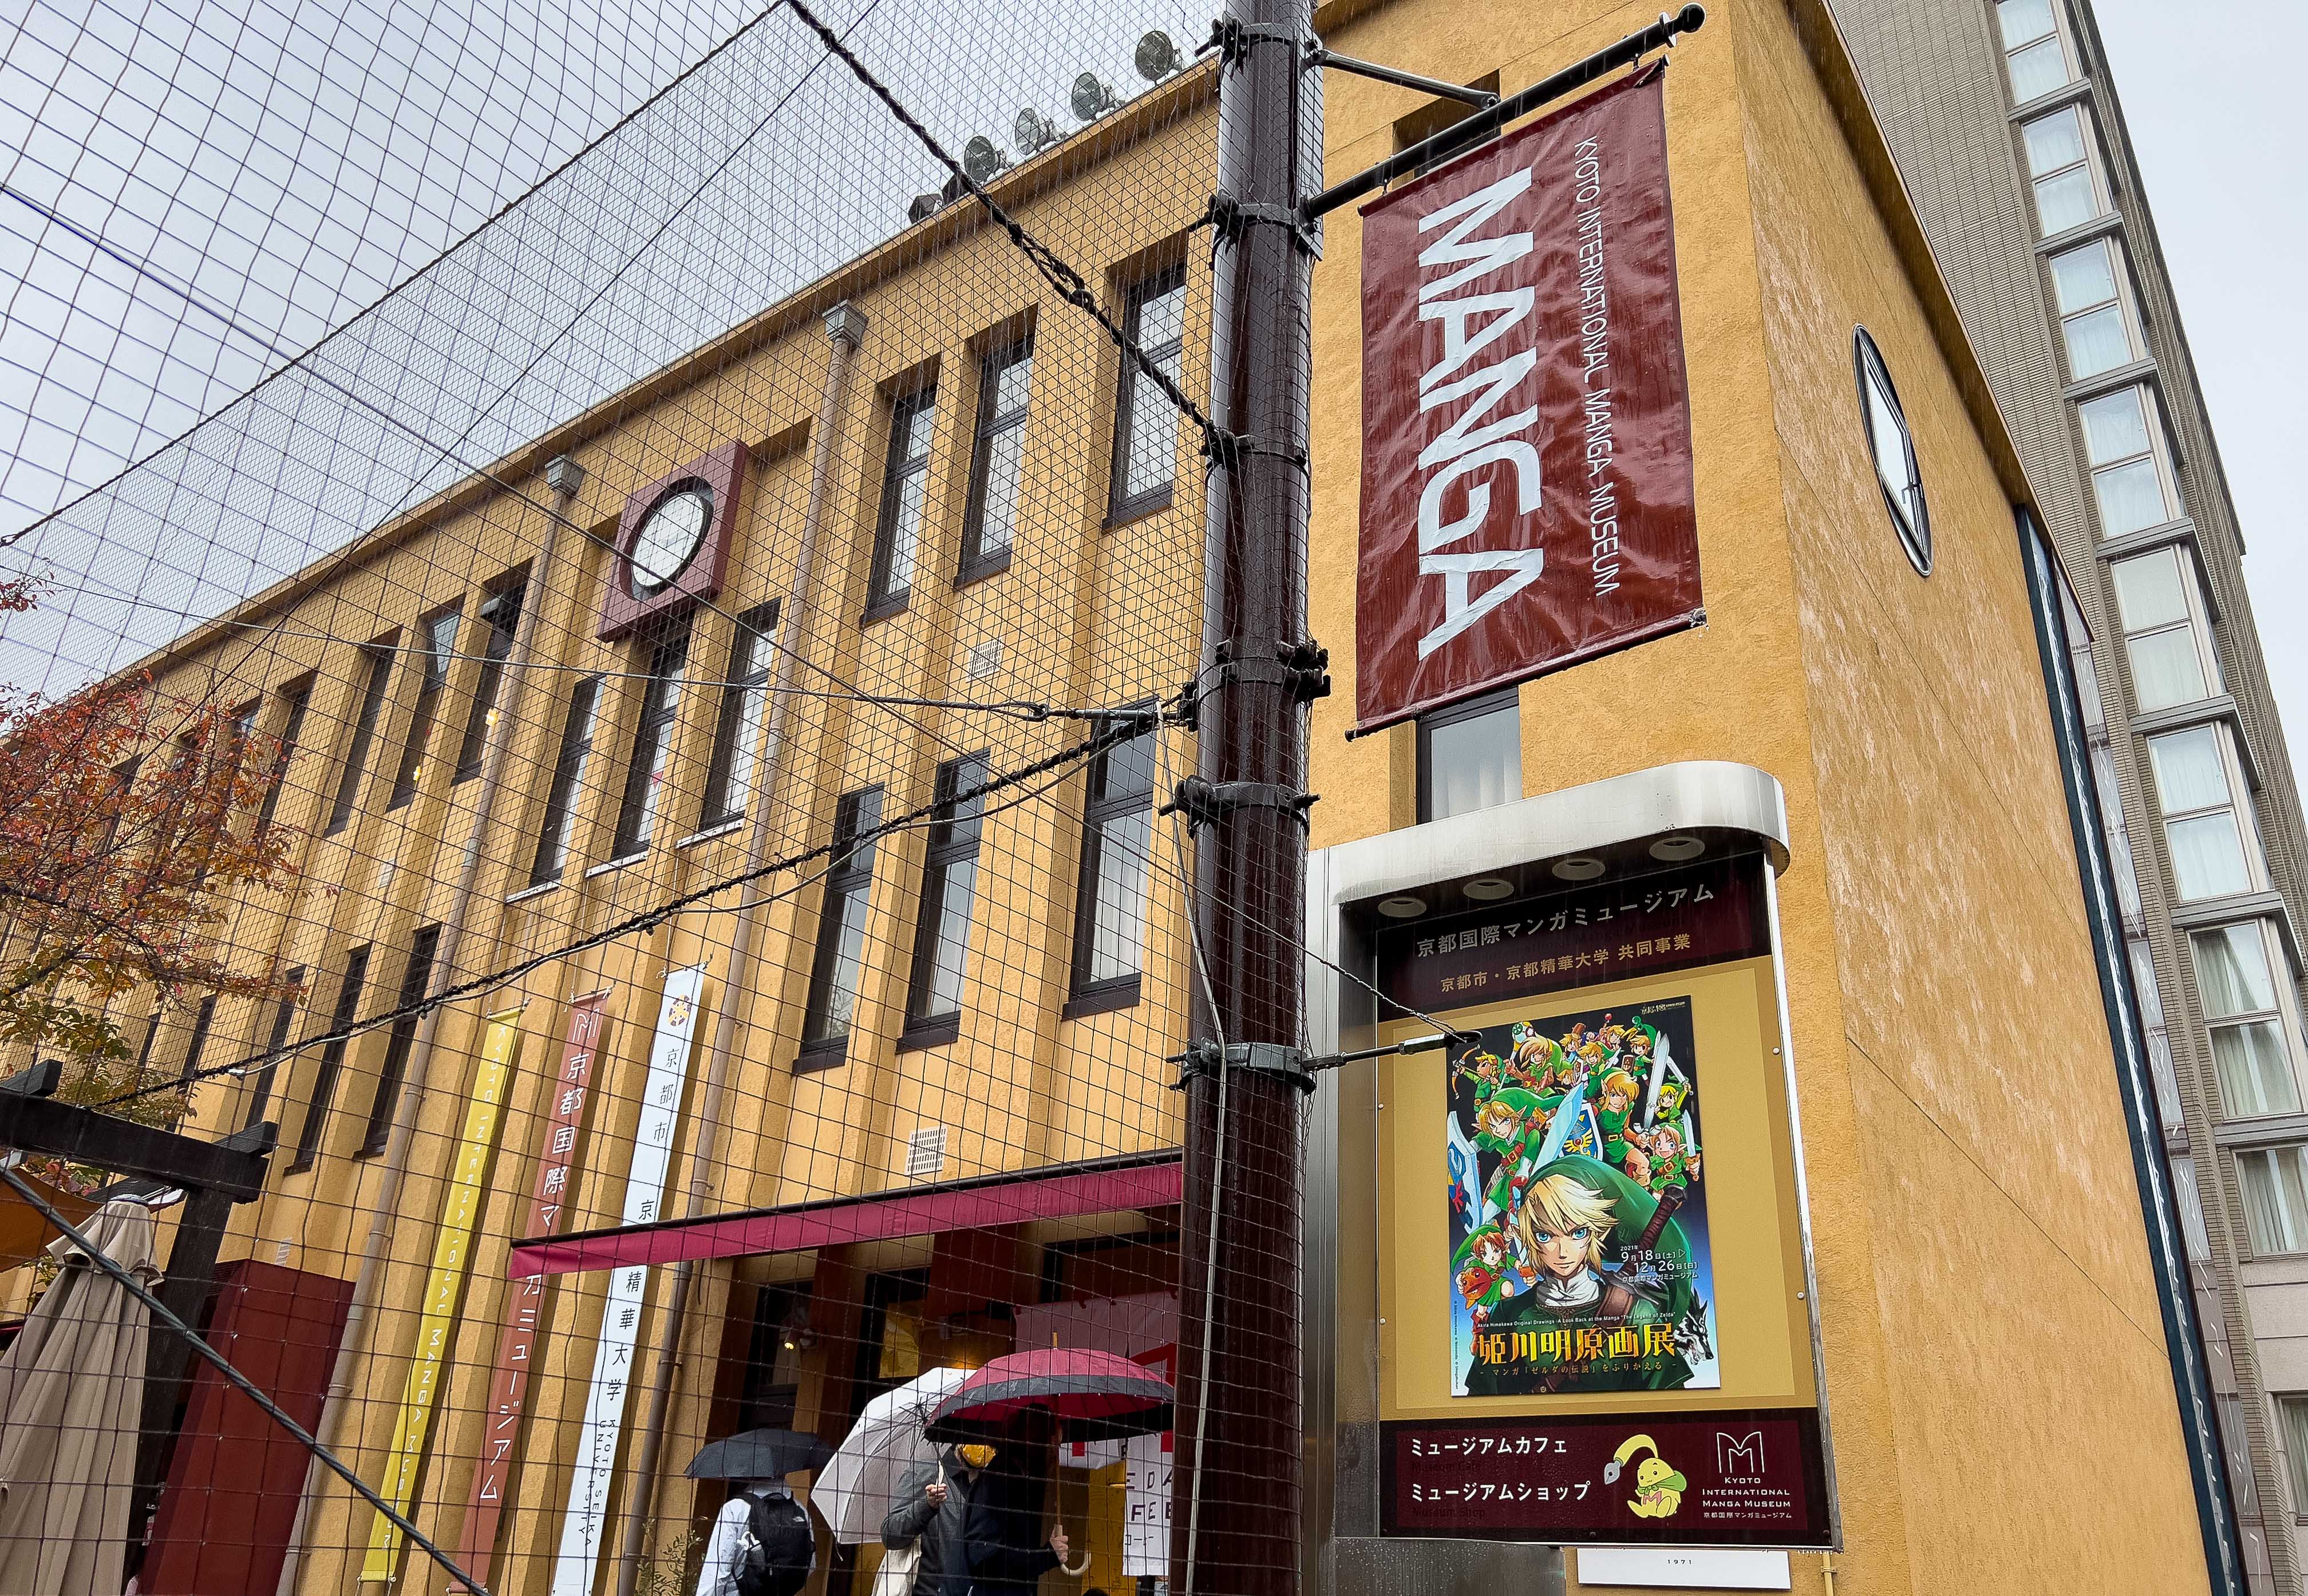 The Kyoto International Manga Museum